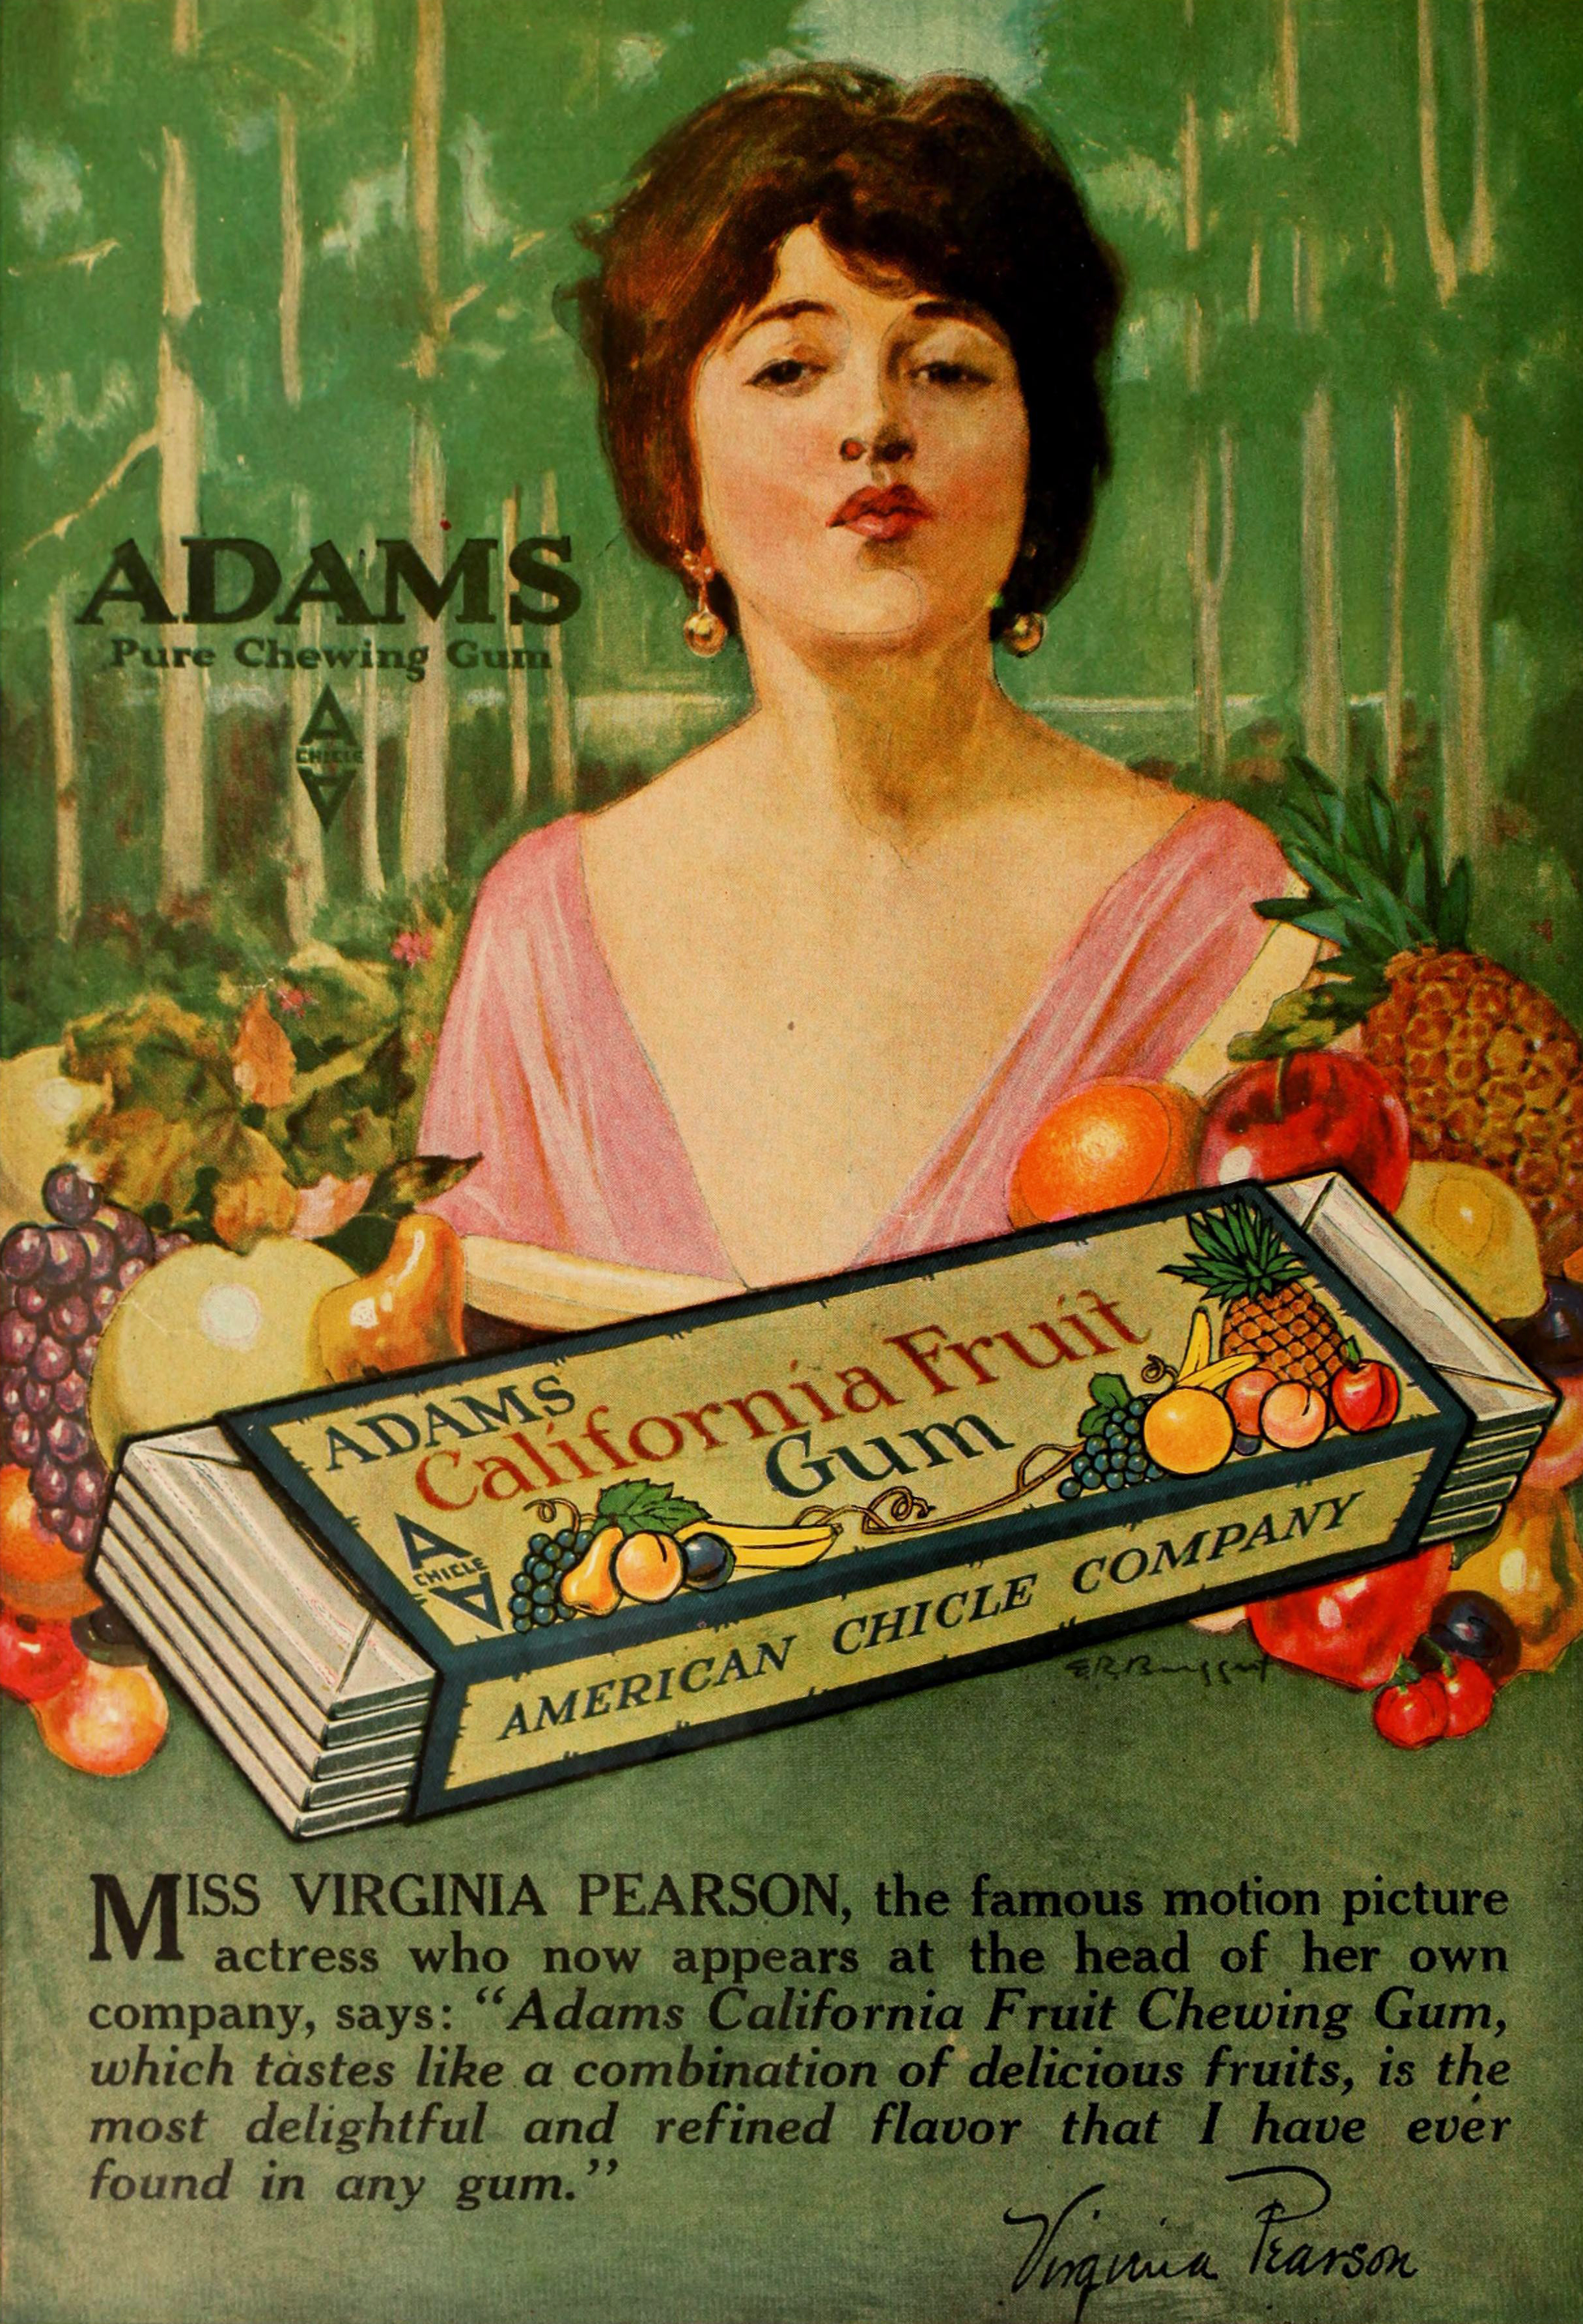 Adams California Fruit Gum American Chicle Company Ad Circa 1919 With Virginia Pearson